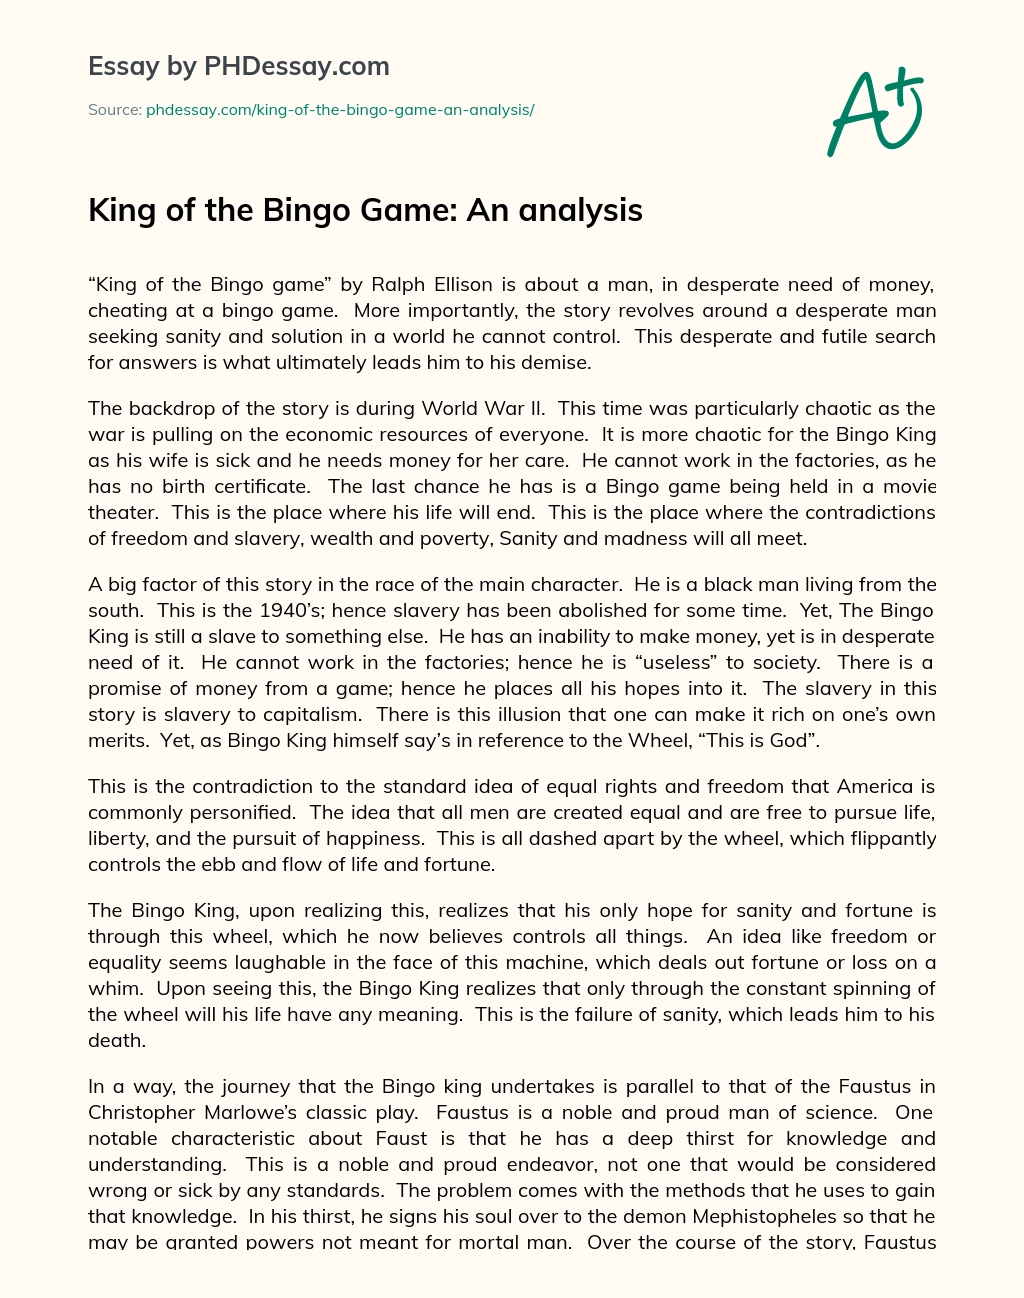 King of the Bingo Game: An analysis essay